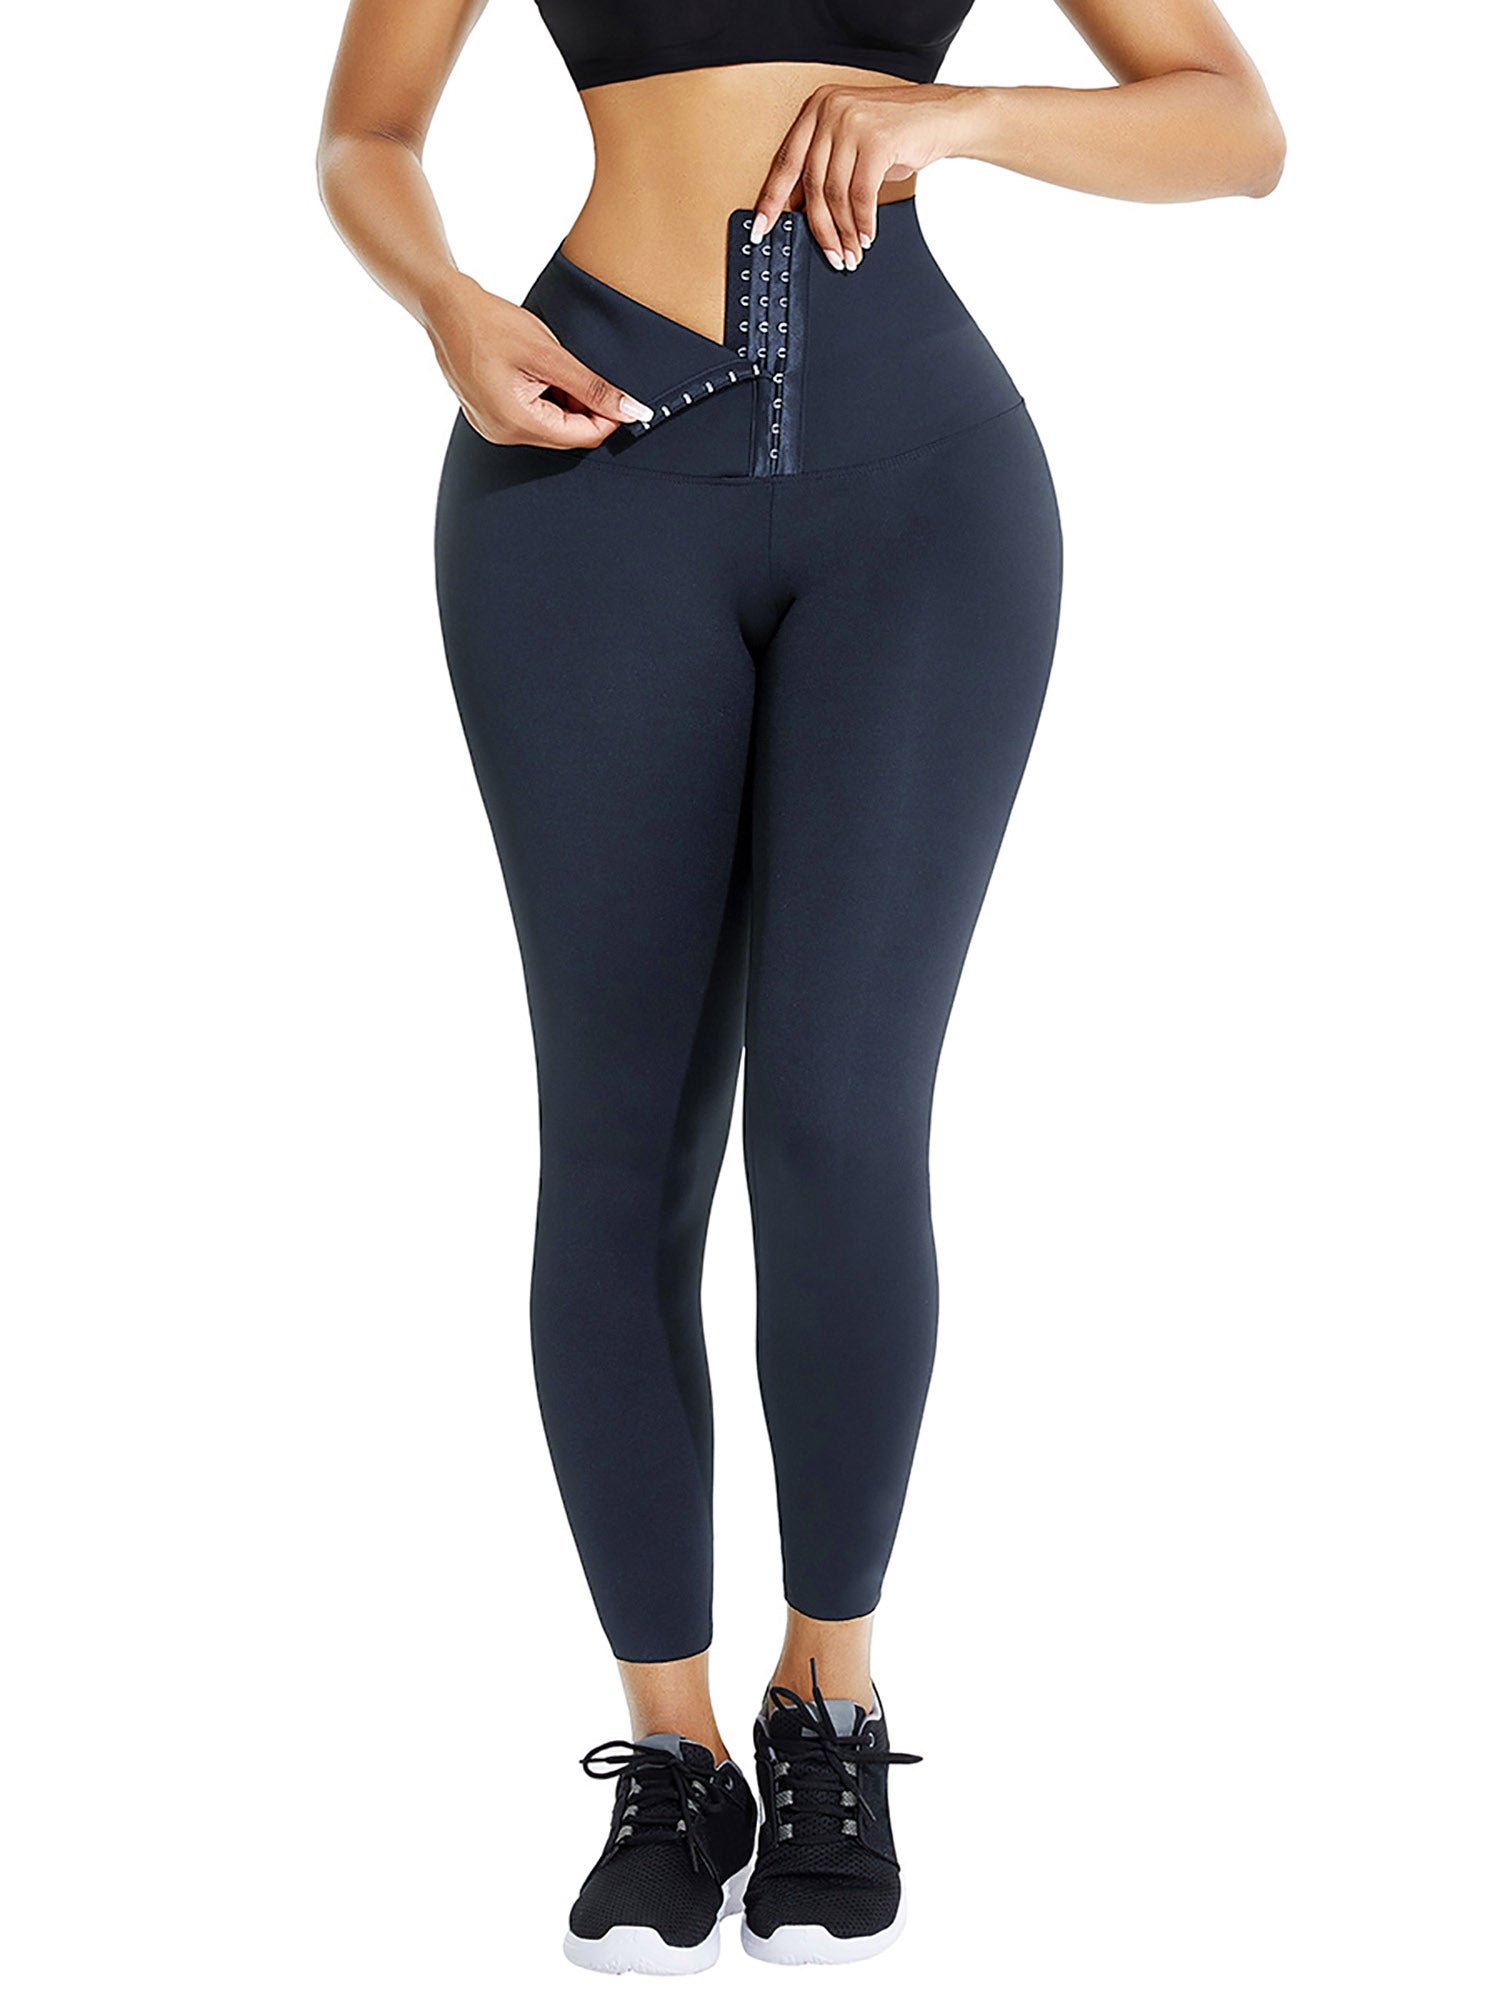 Printed Yoga Pants For Women Gym High Waist With Pockets Abdominal Control Yoga  Pants Yoga Pants 4-Way Stretchy Yoga Leggings Size - XS,S, M, L, XL, 2XL,, Women  Yoga Leggings, Women Workout